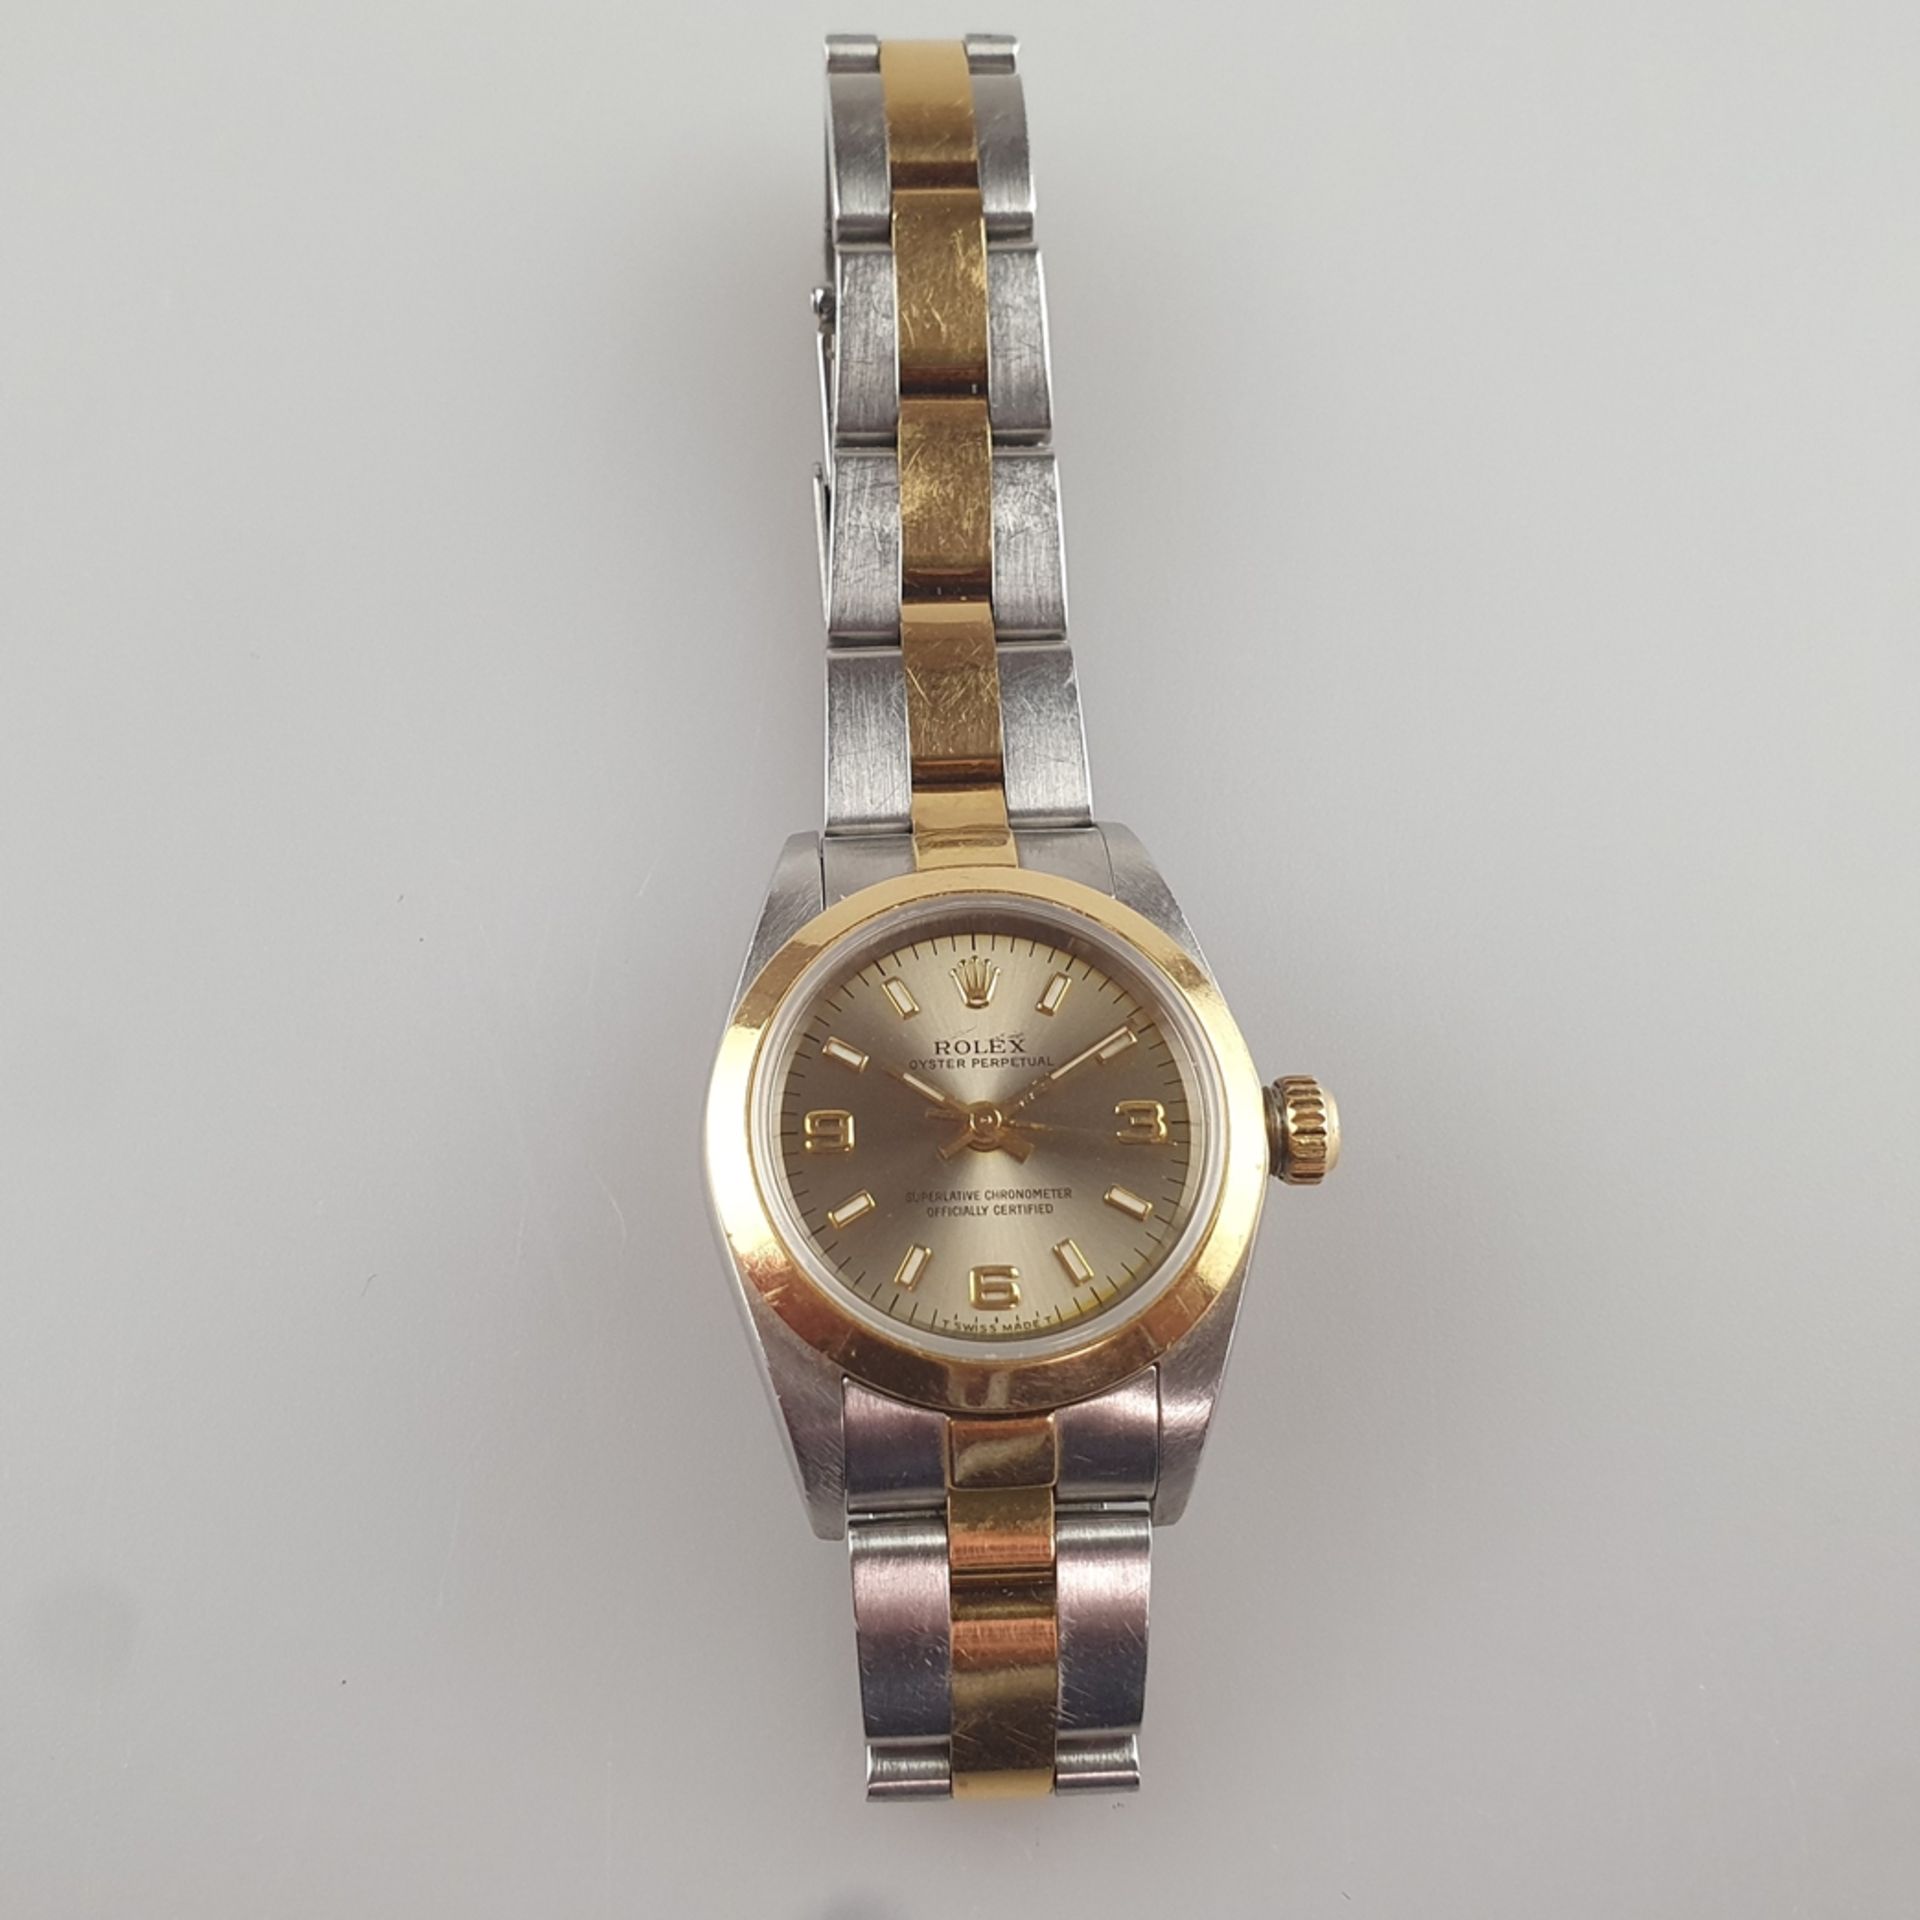 Rolex-Damenarmbanduhr - Oyster Perpetual, Datejust, bicolores Gehäuse und Armband aus 18K Gelbgold - Image 2 of 10